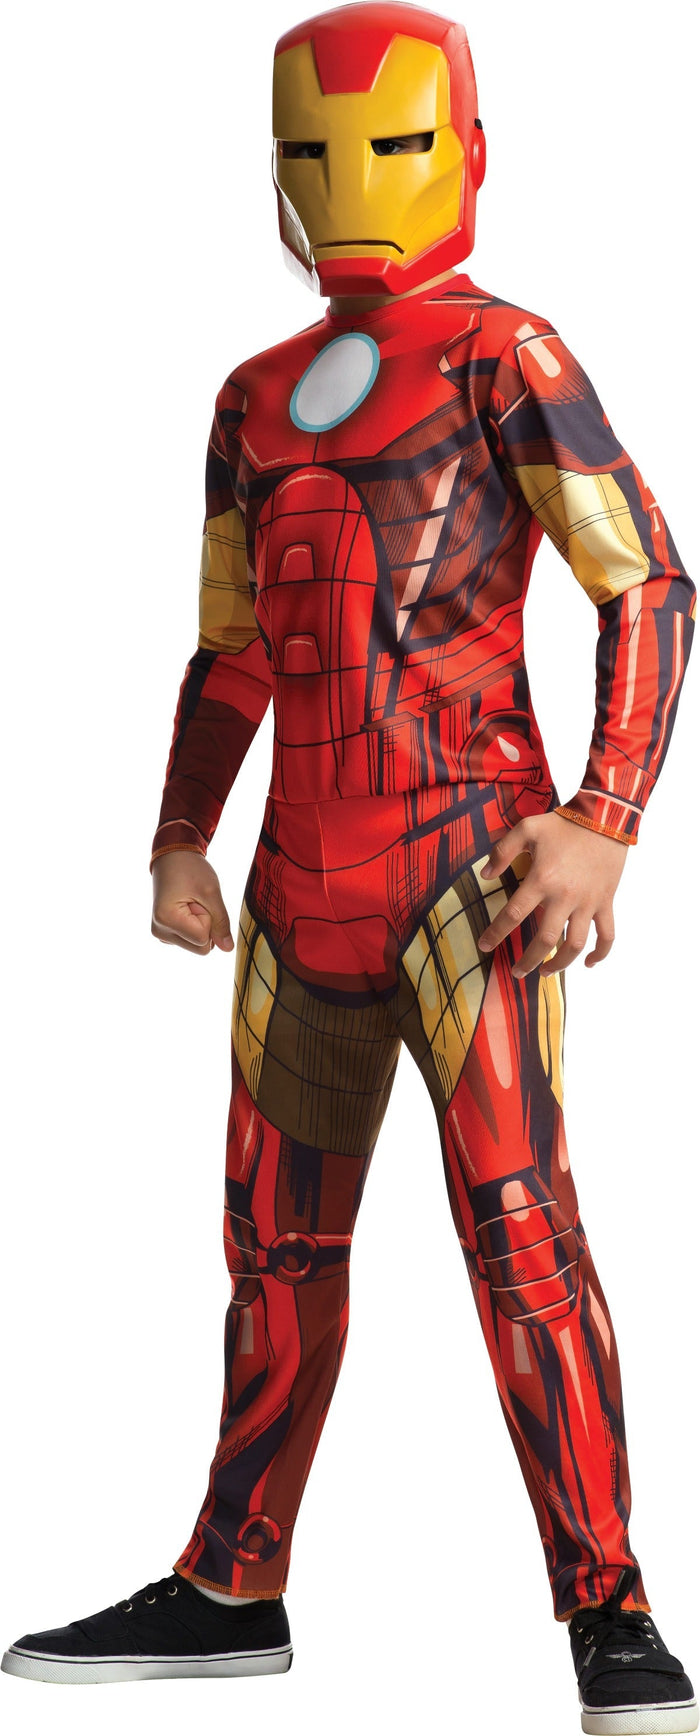 Iron Man Classic Costume for Kids - Marvel Avengers